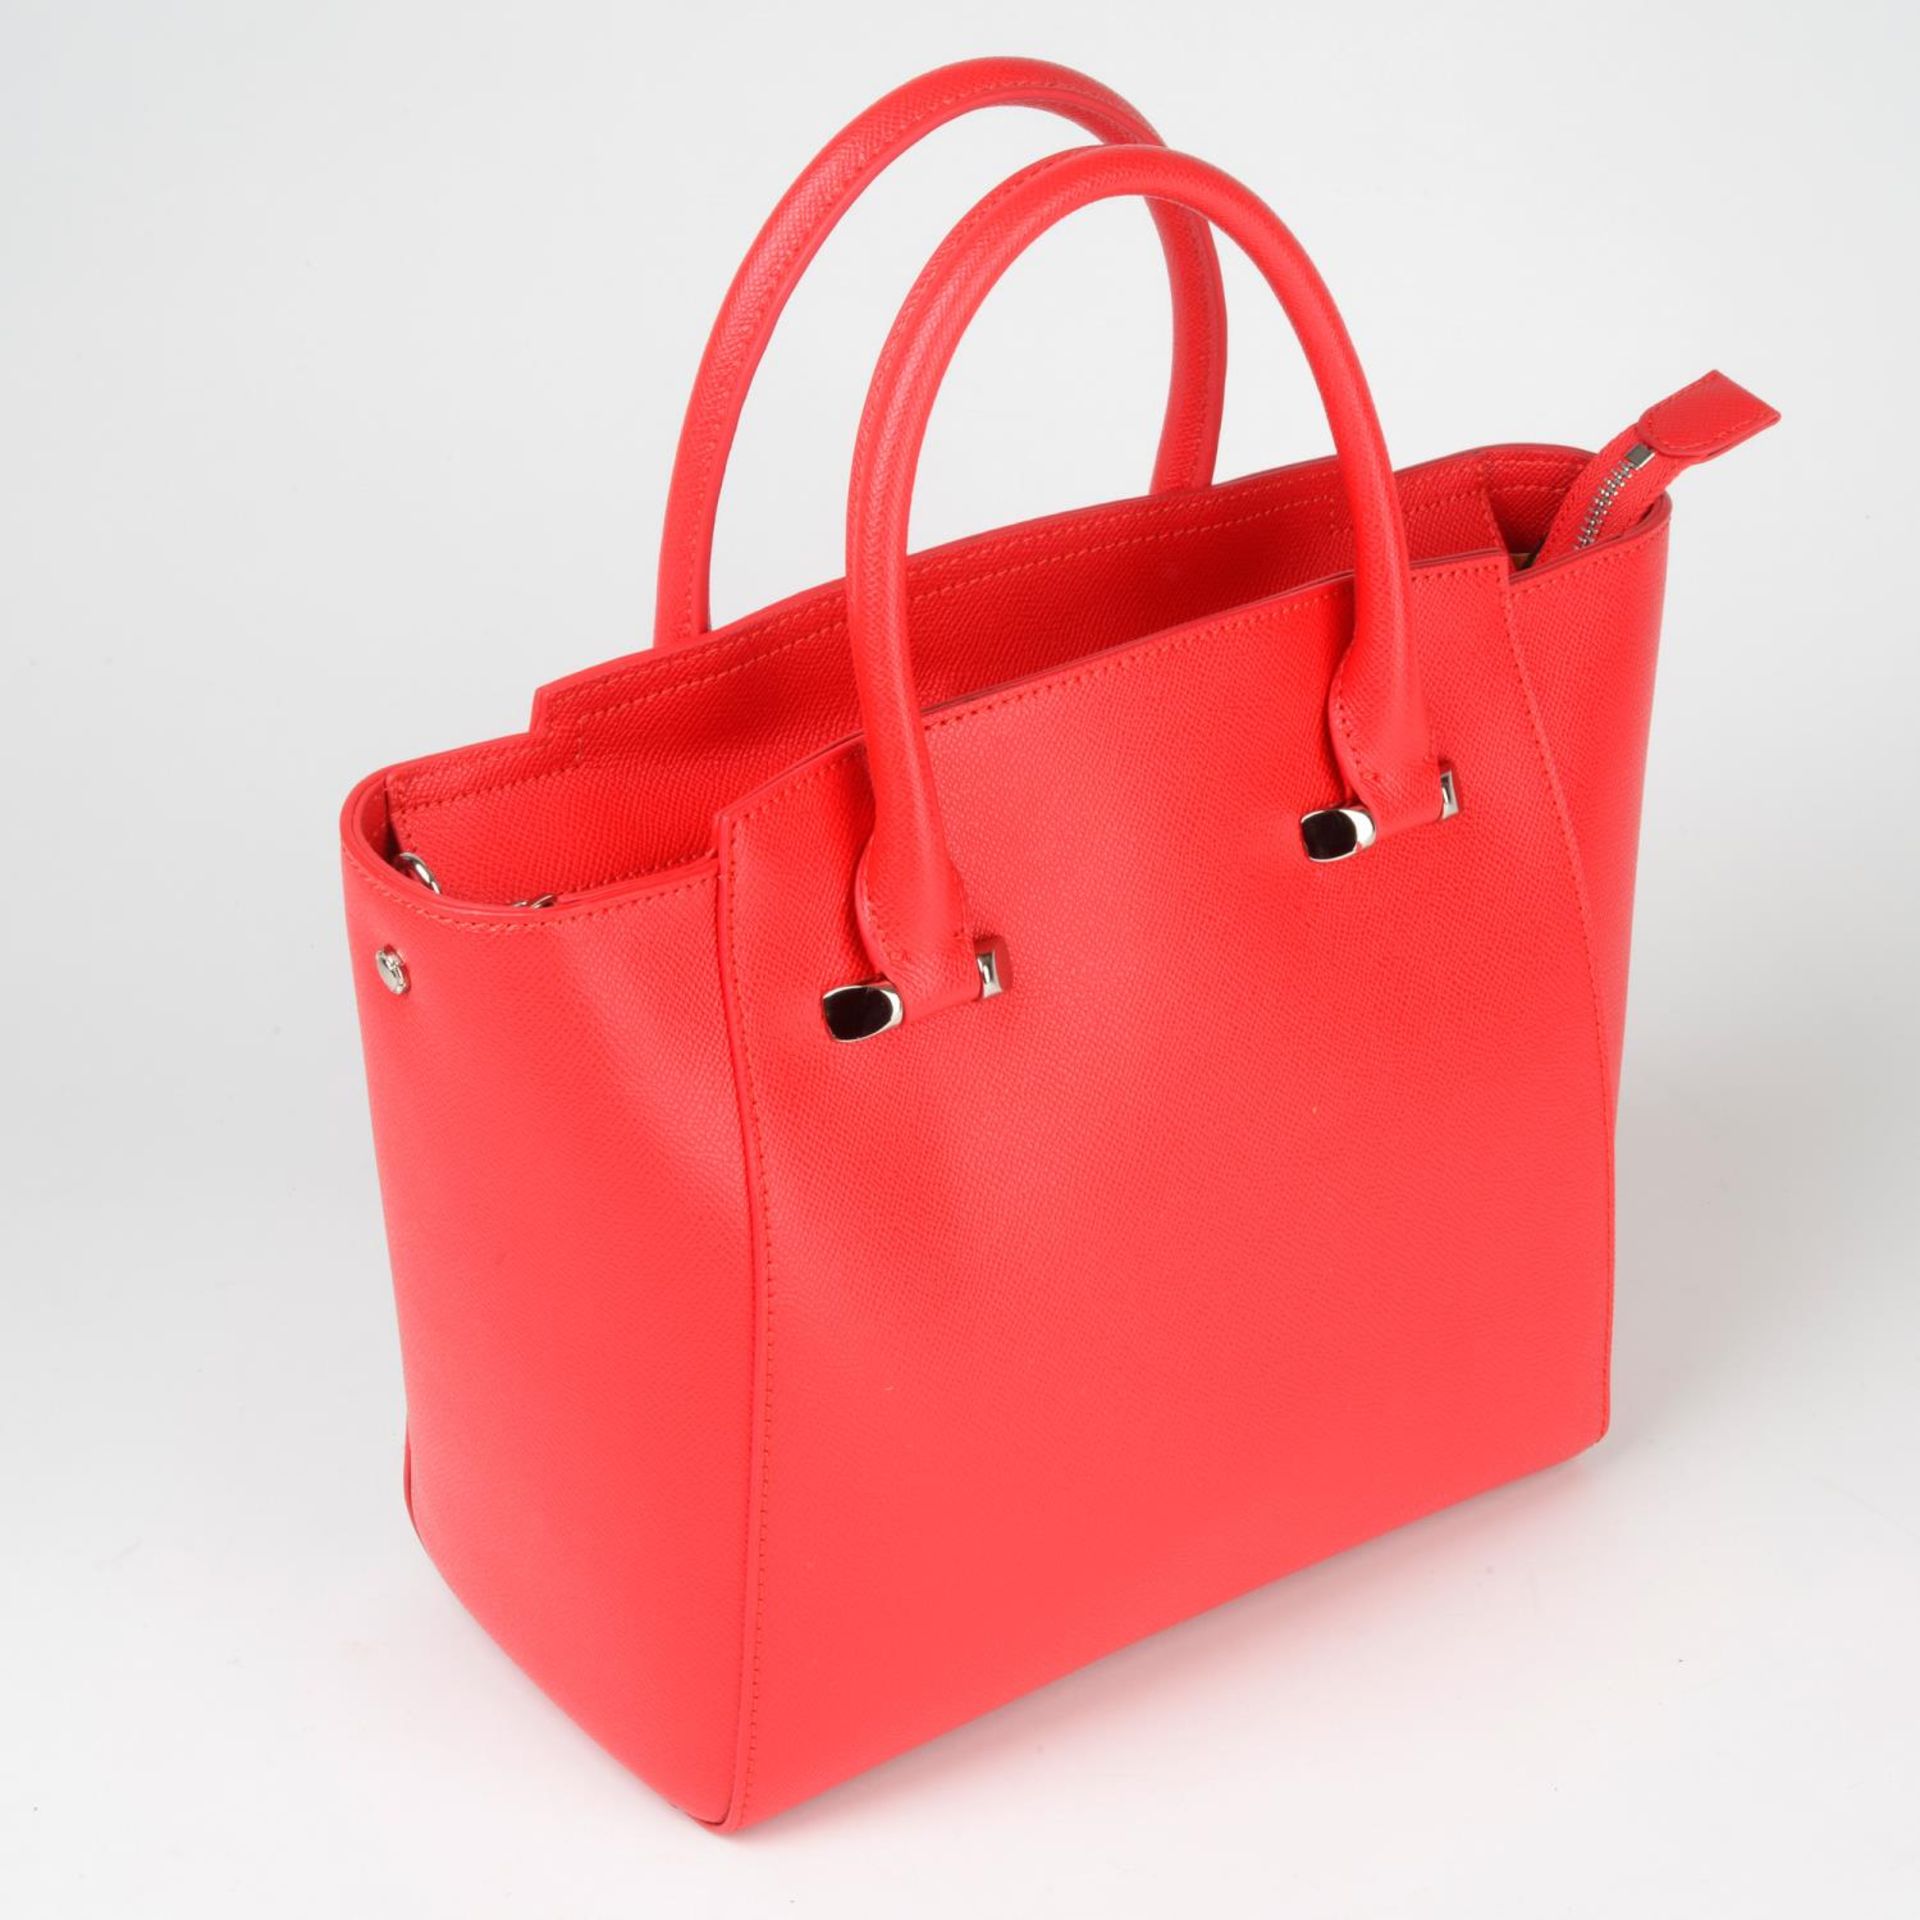 CAVALLO MODA - two leather handbags. - Image 4 of 5